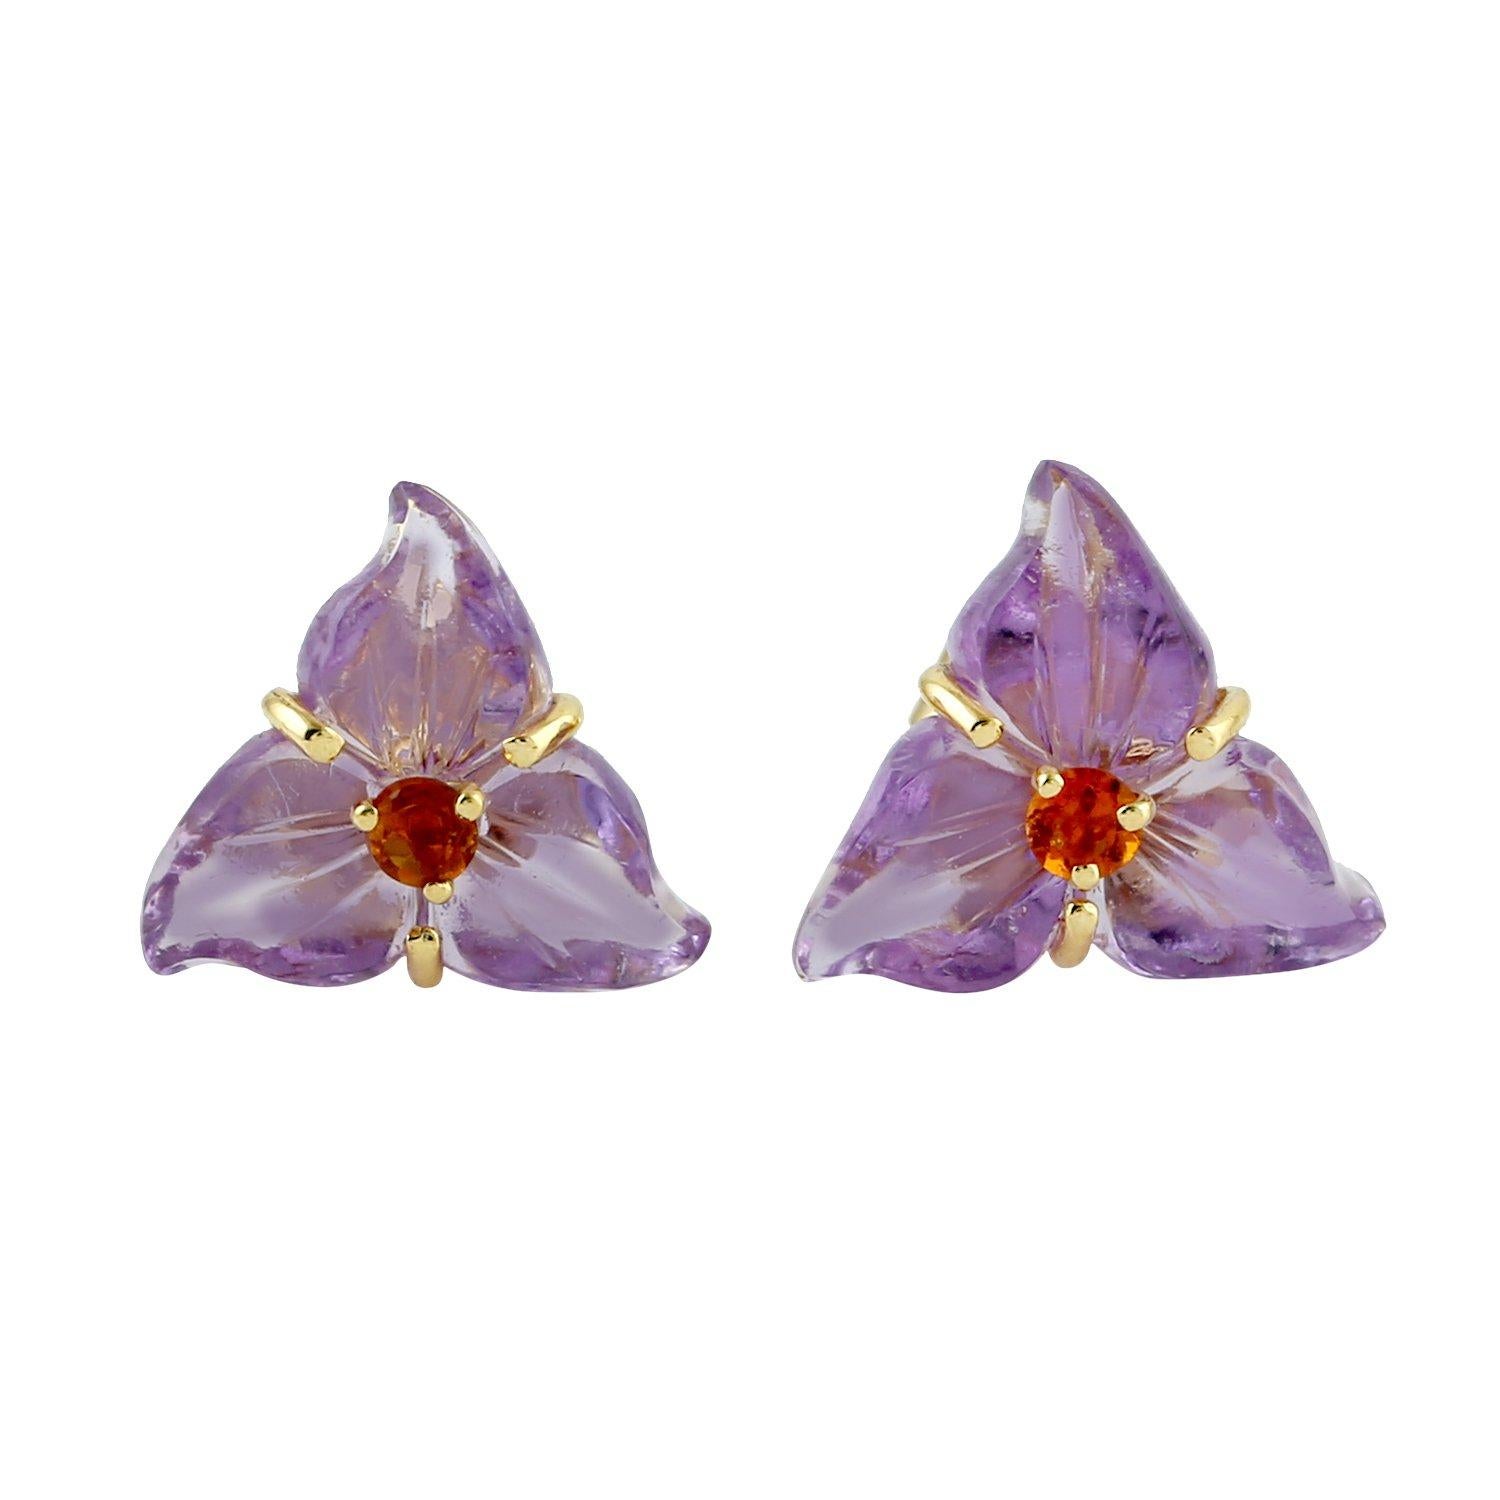 Mixed Cut 15.82 Carat Carved Amethyst Topaz 18 Karat Gold Flower Earrings For Sale